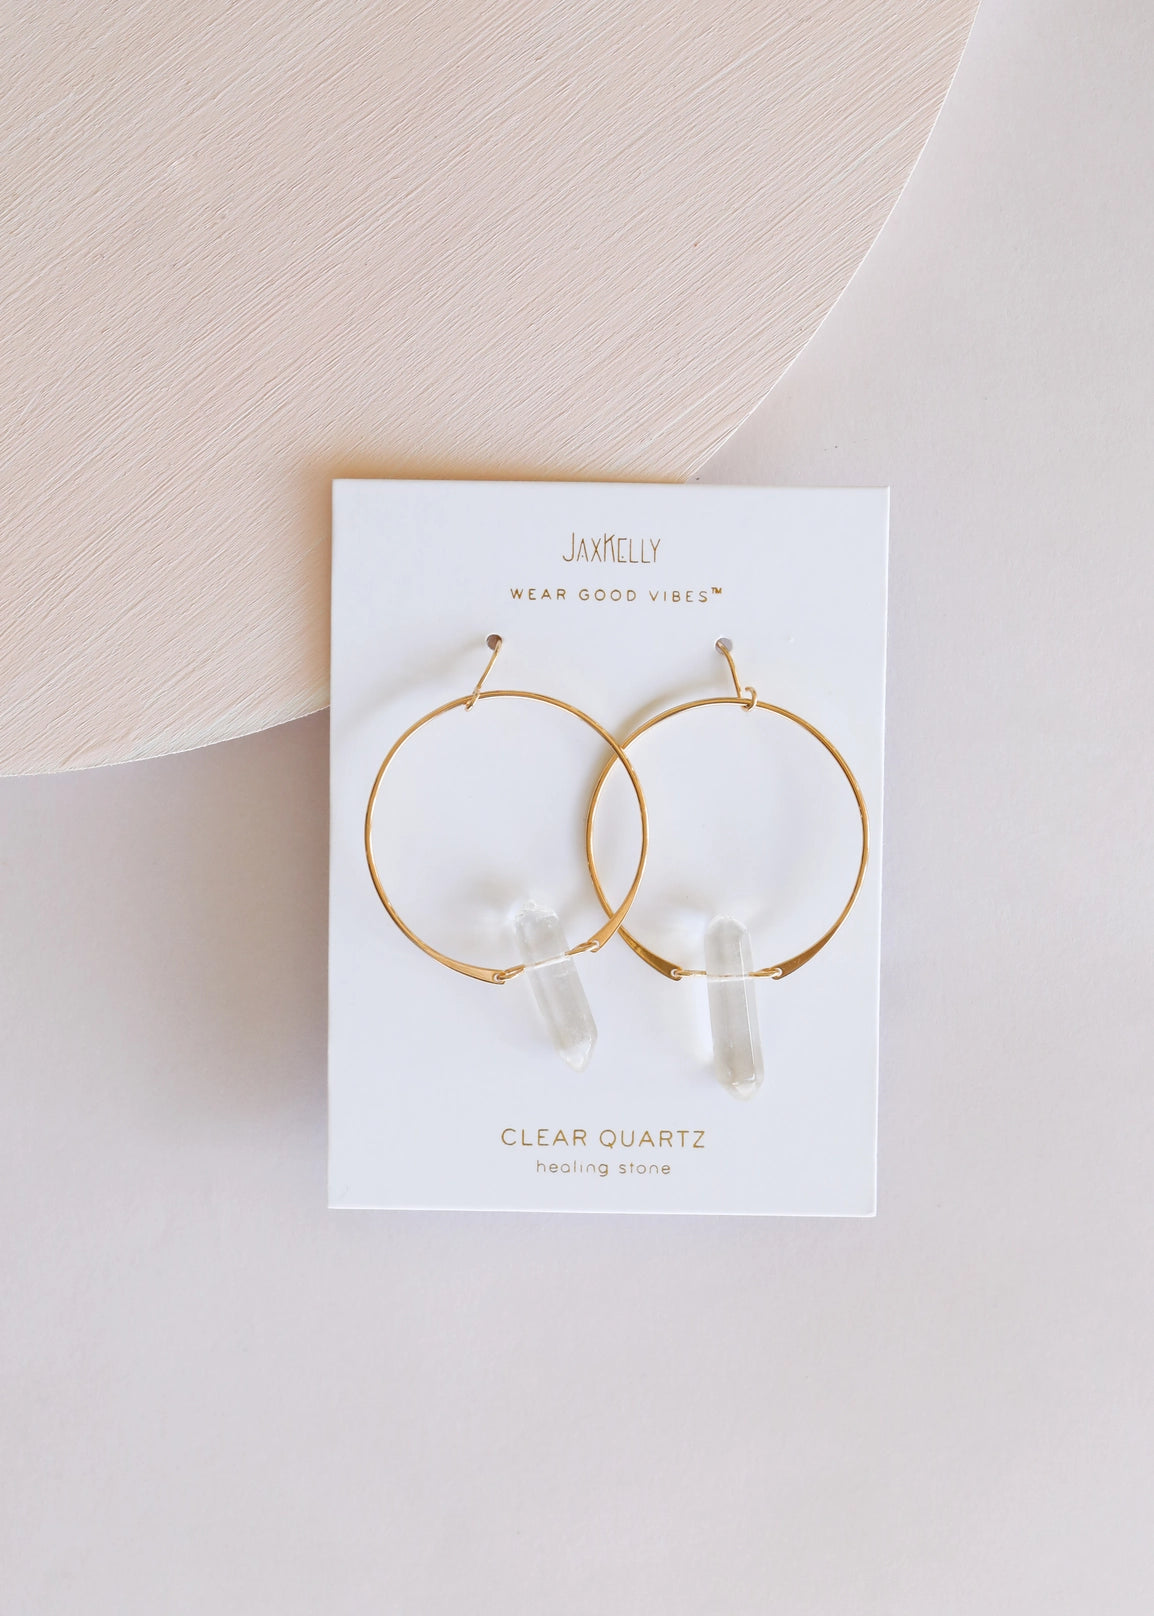 Clear Quartz Hoop Earrings - Moon Room Shop and Wellness